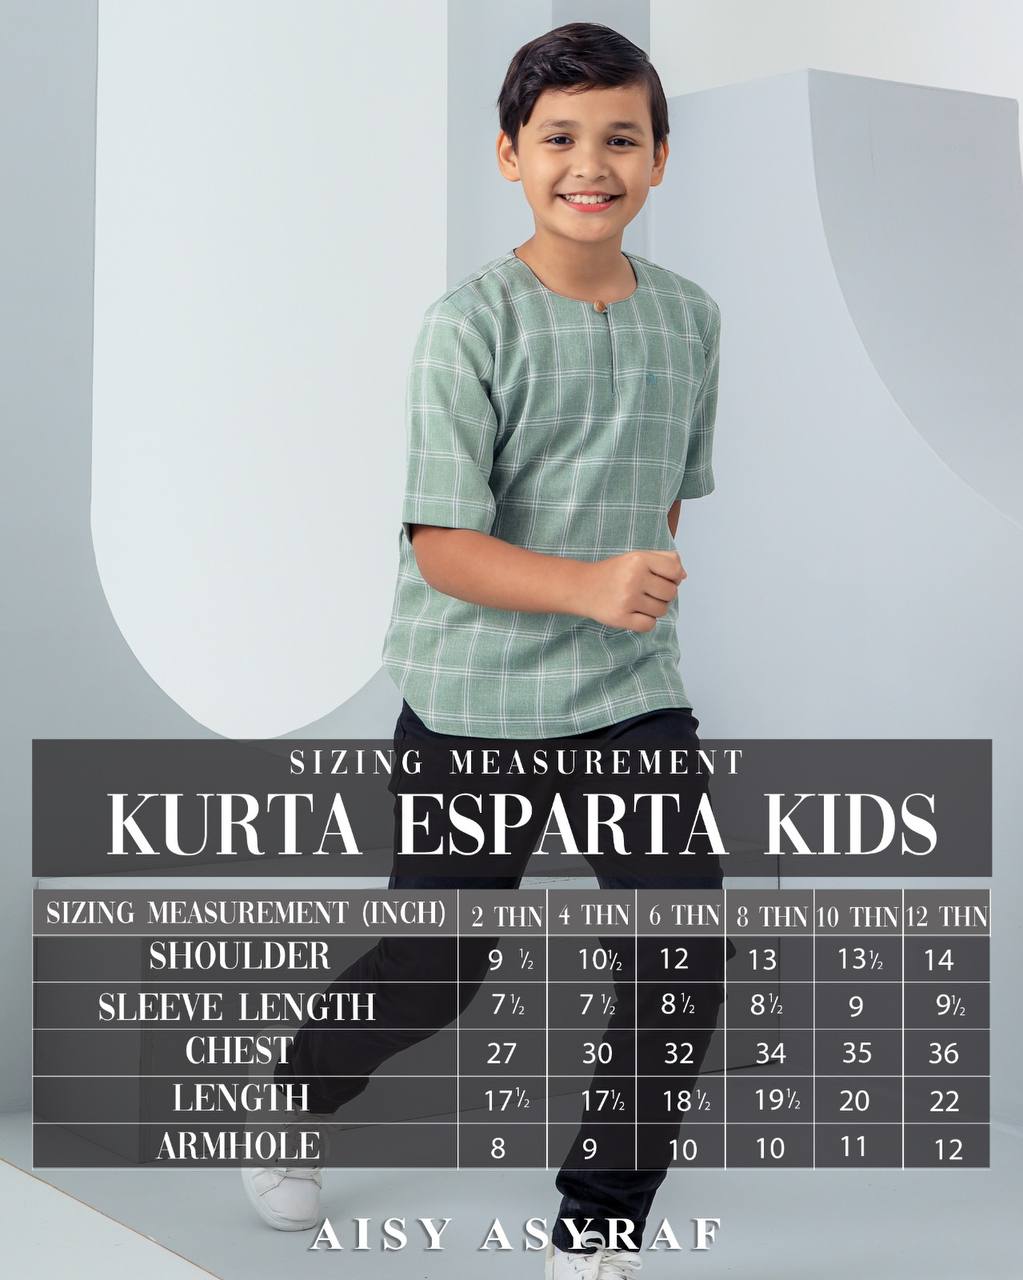 Kurta Esparta Kids - Brown